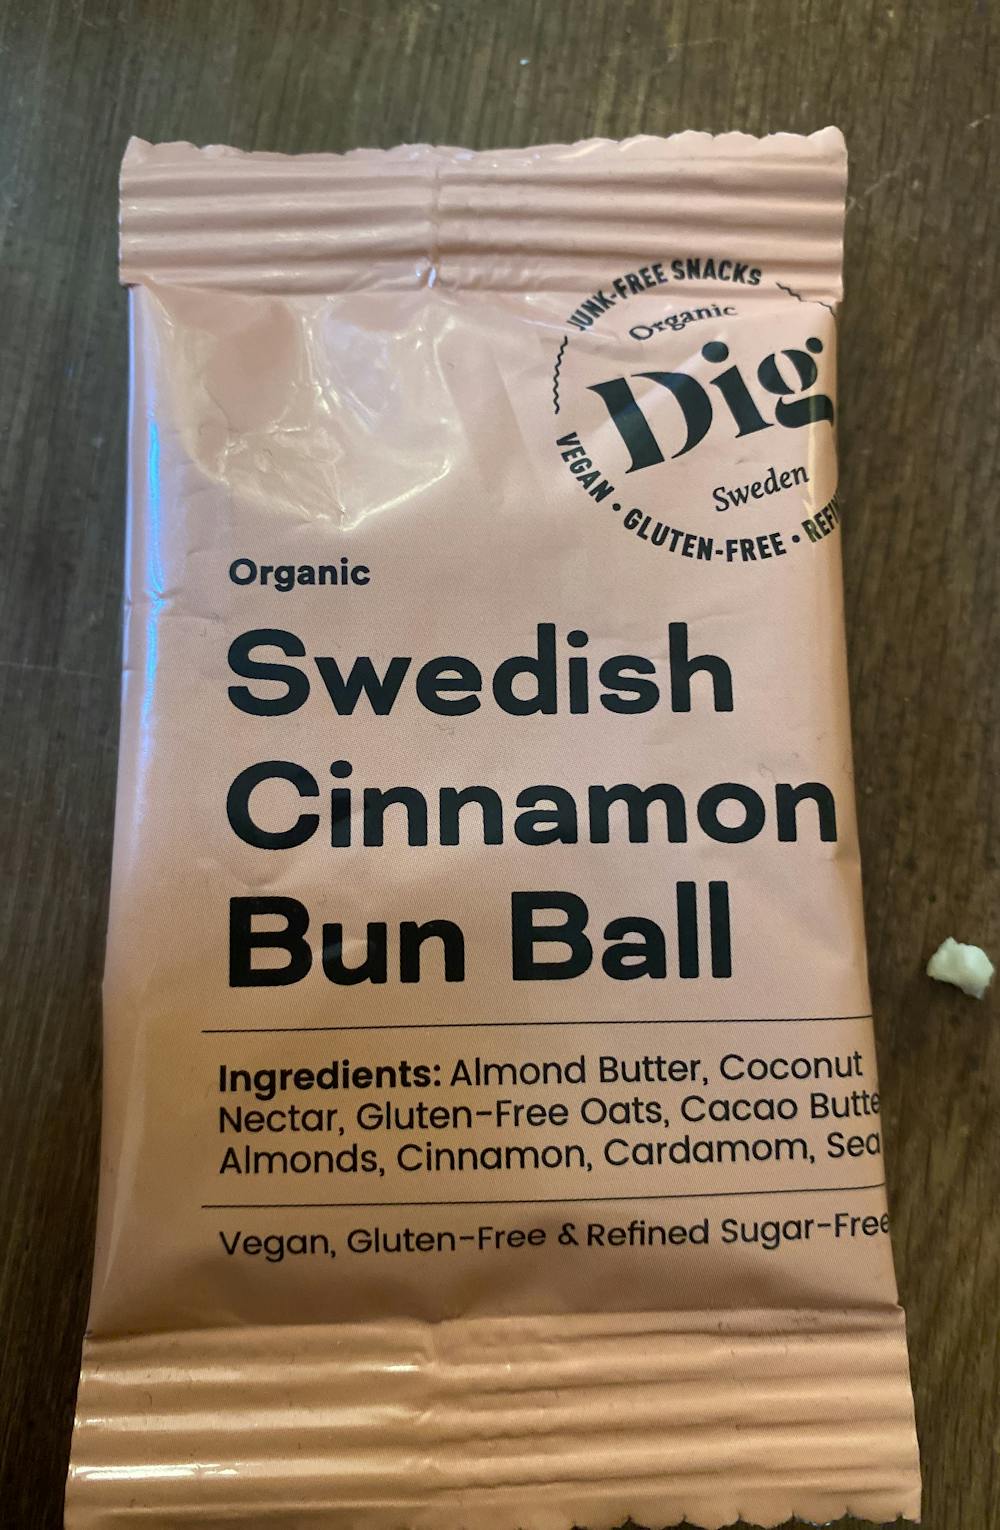 Swedish cannamon bun ball, Dig